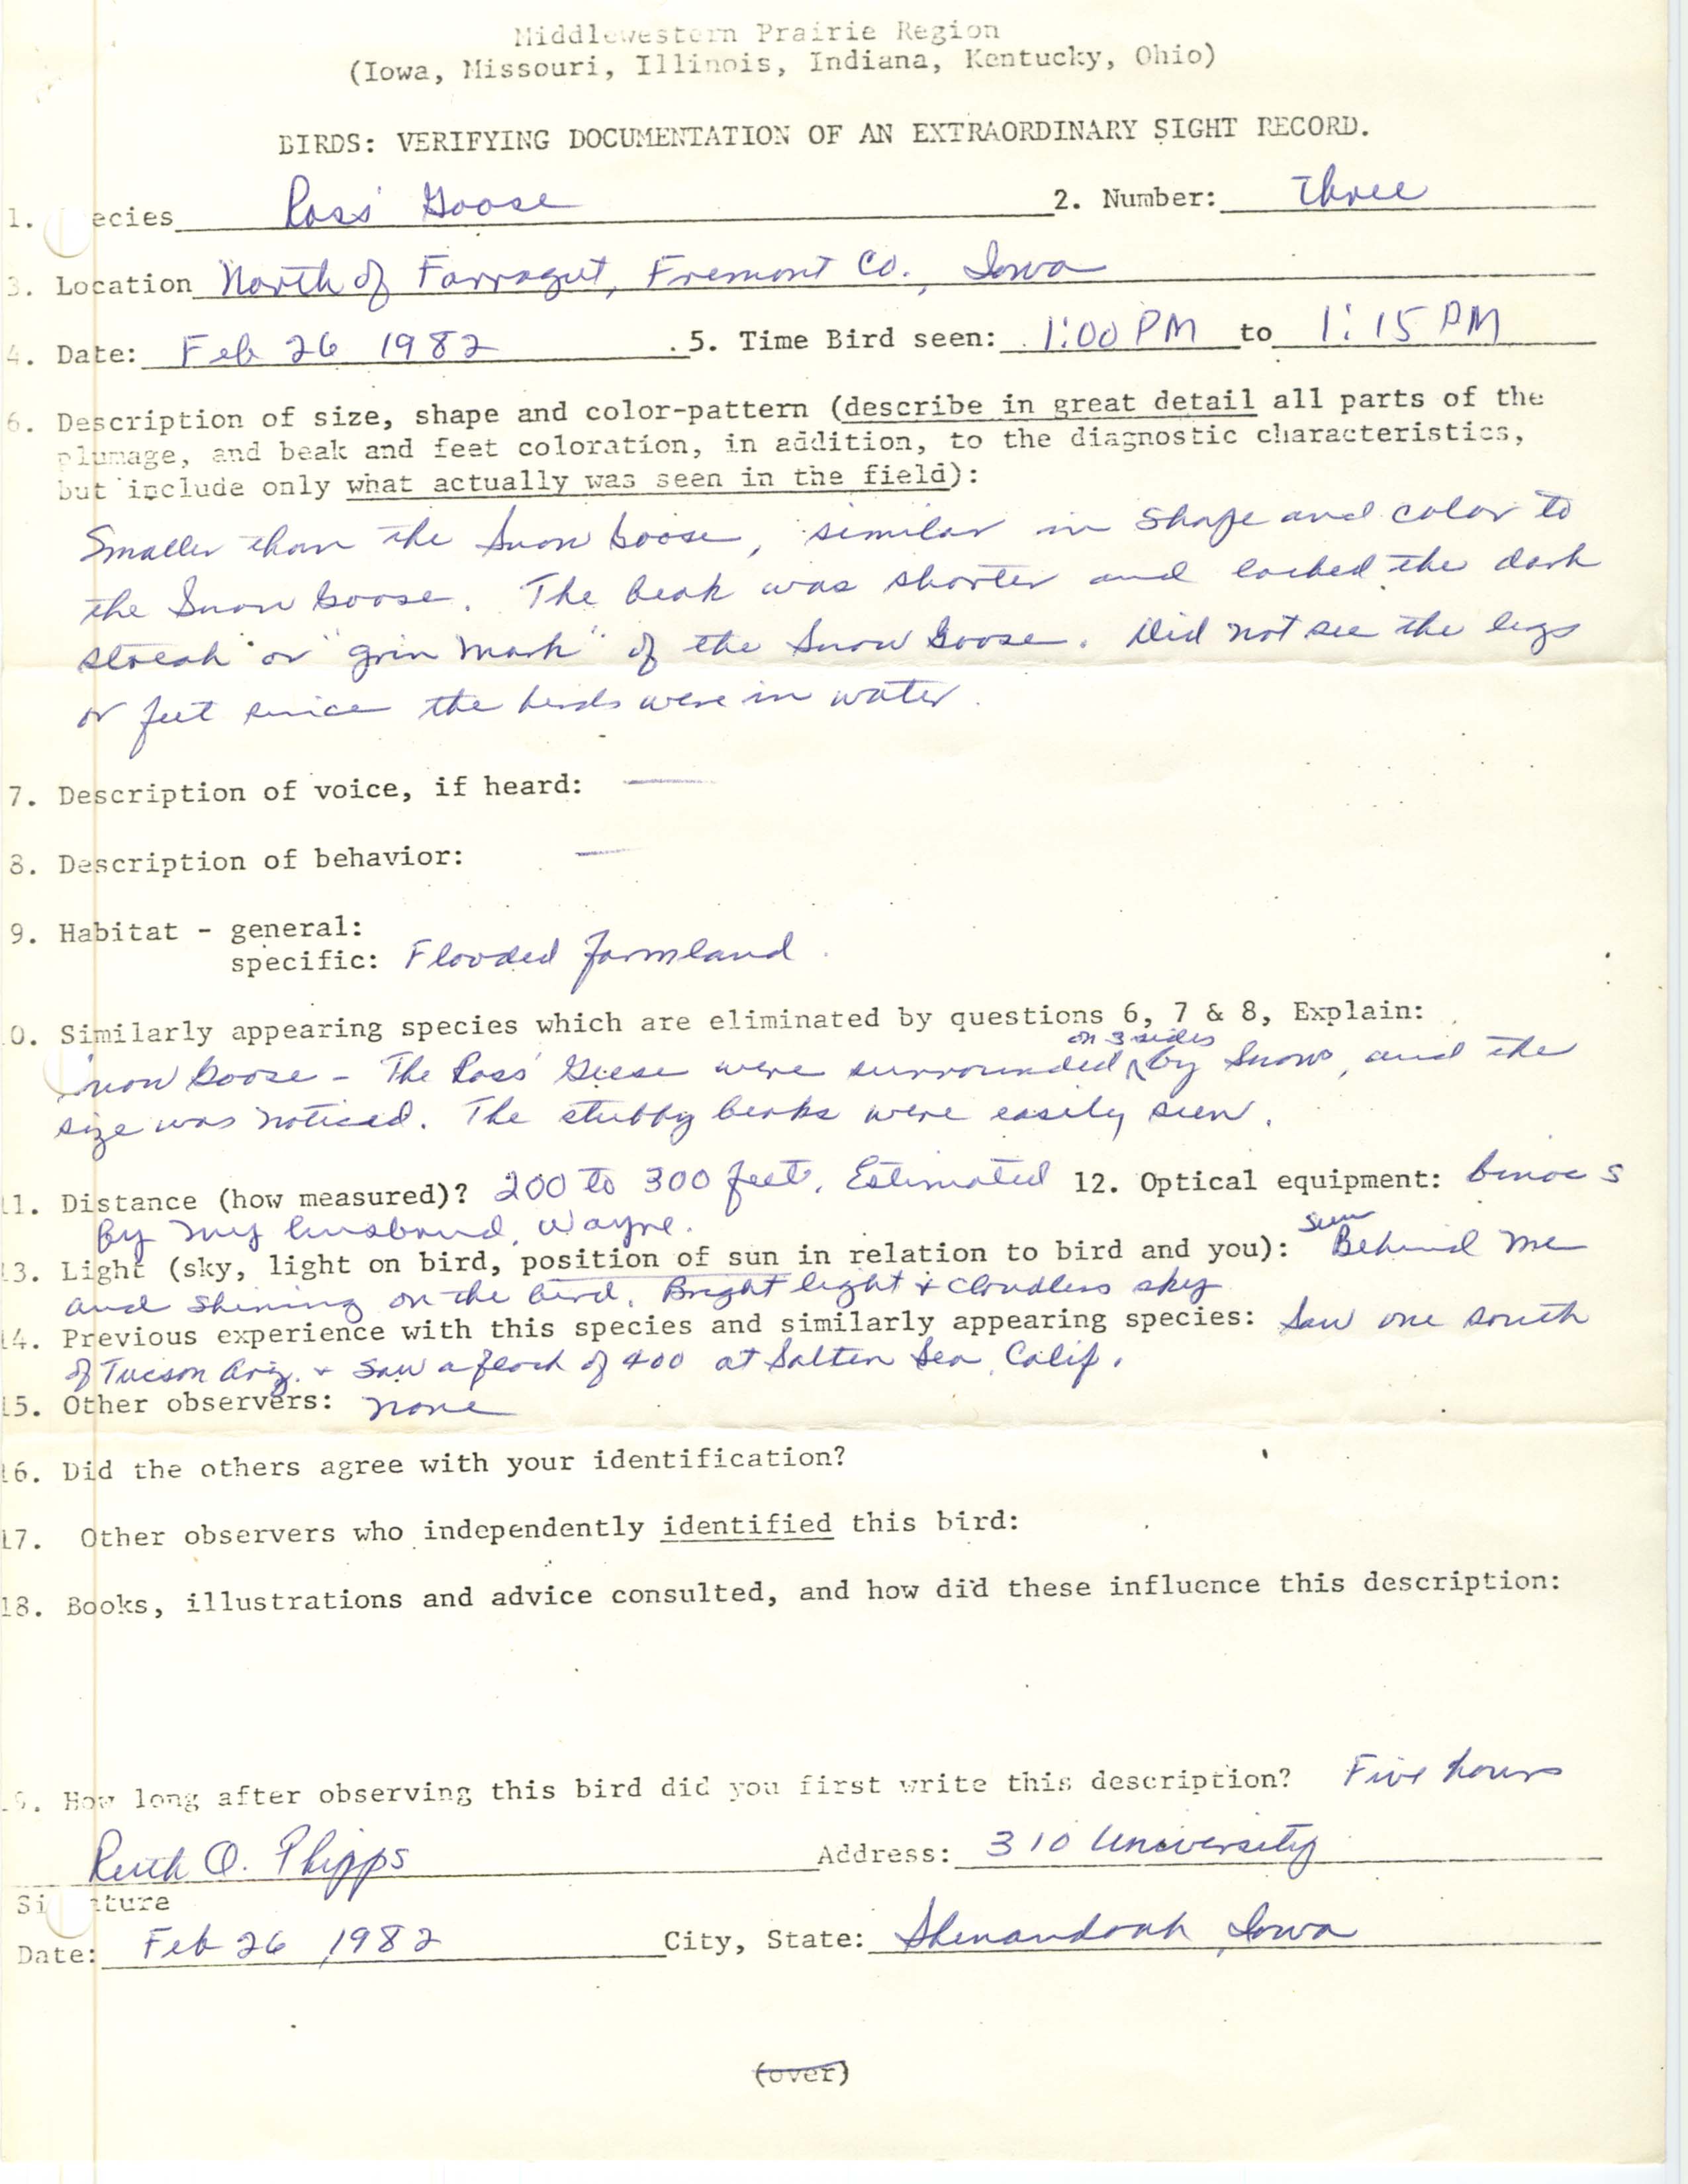 Rare bird documentation form for Ross' Goose at Farragut, 1982